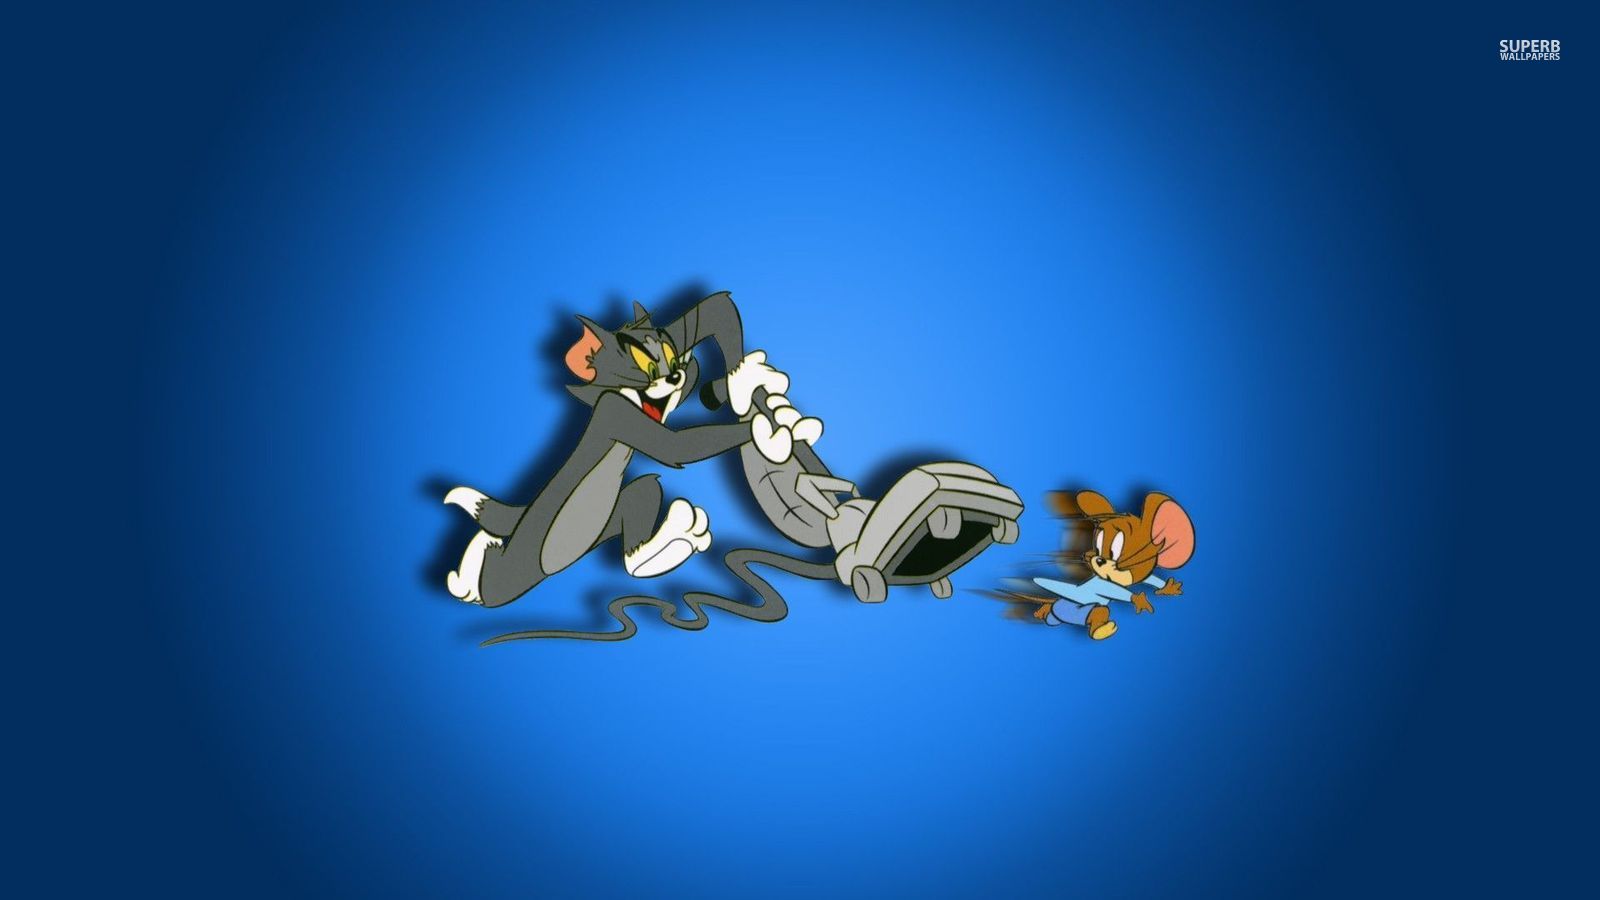 Tom and Jerry - Cartoons Wallpaper (38677683) - Fanpop